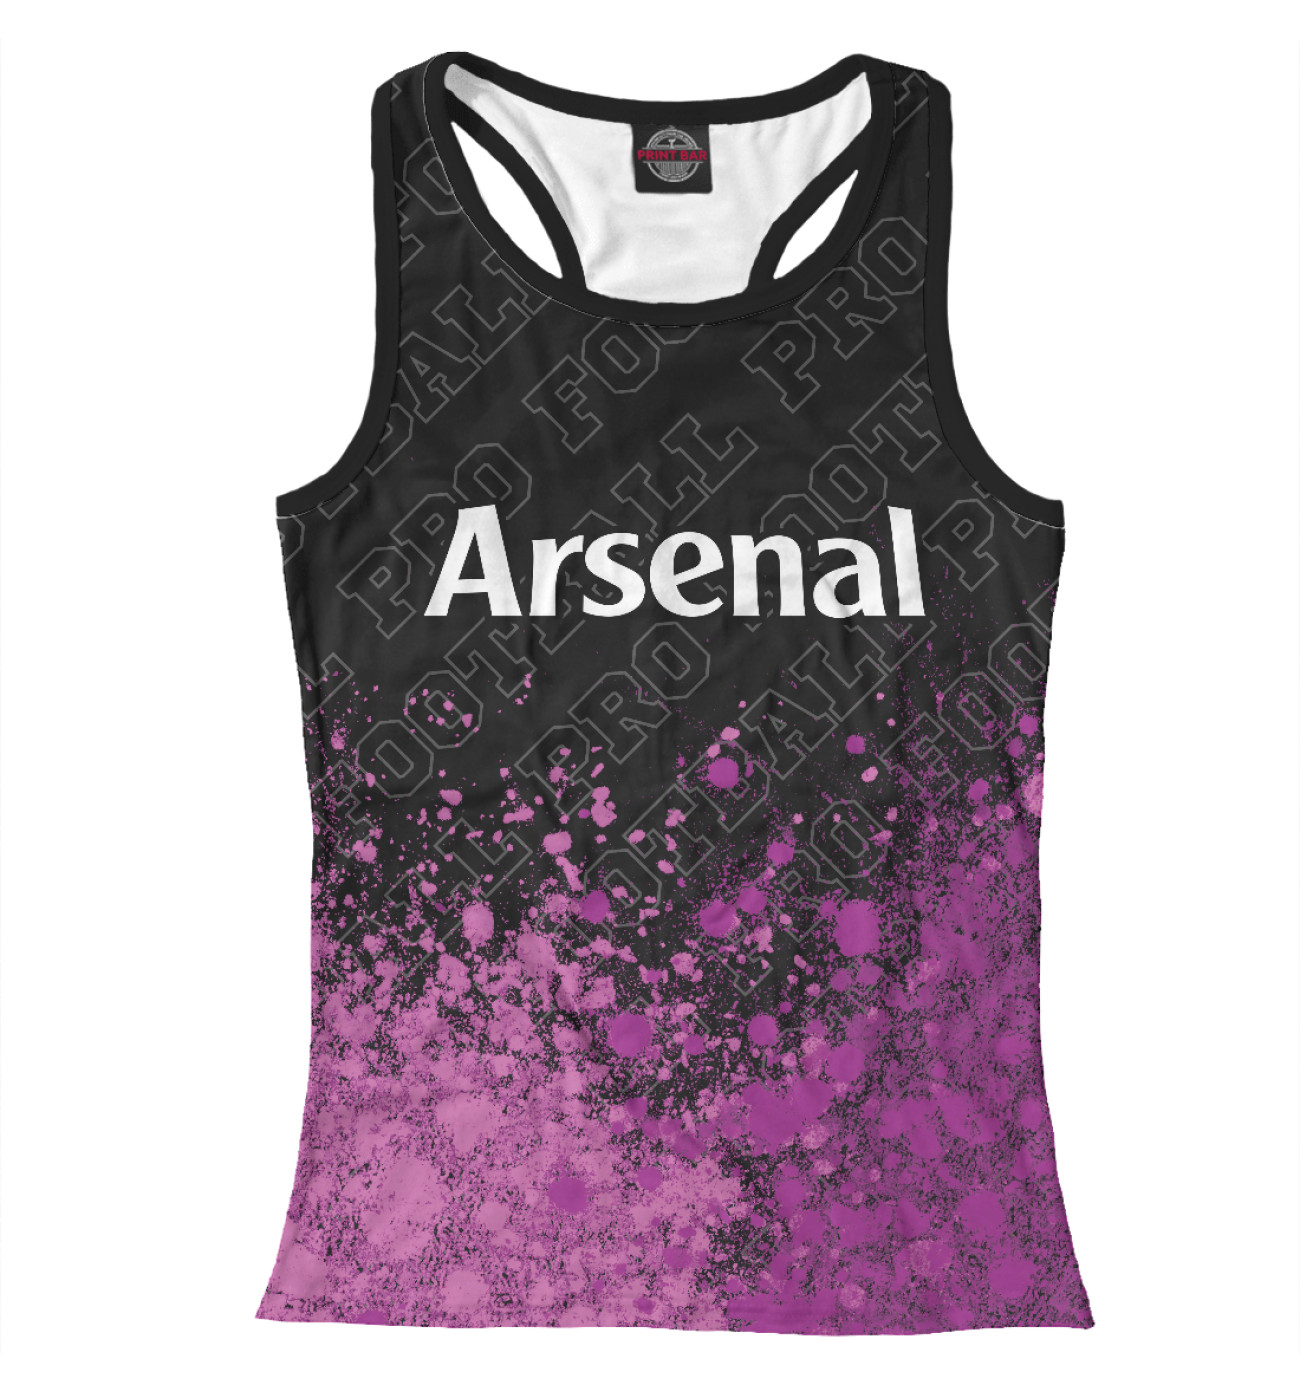 Женская Борцовка Arsenal Pro Football (color splash), артикул: ARS-755668-mayb-1